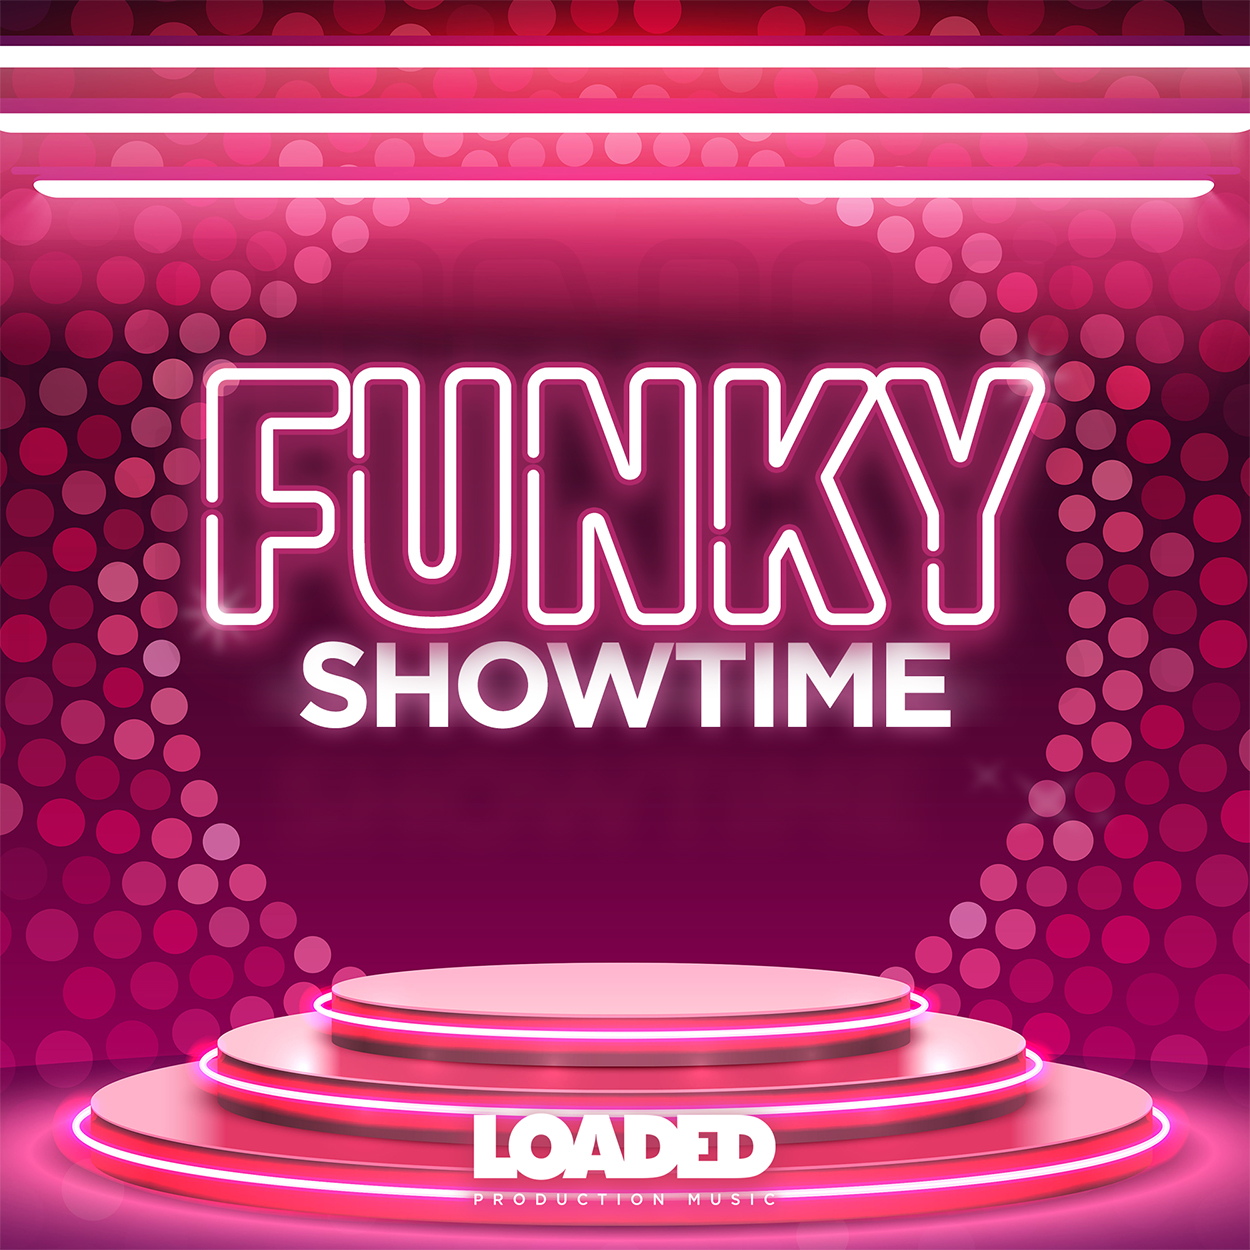 LPM200 - Funky Showtime ALBUM COVER